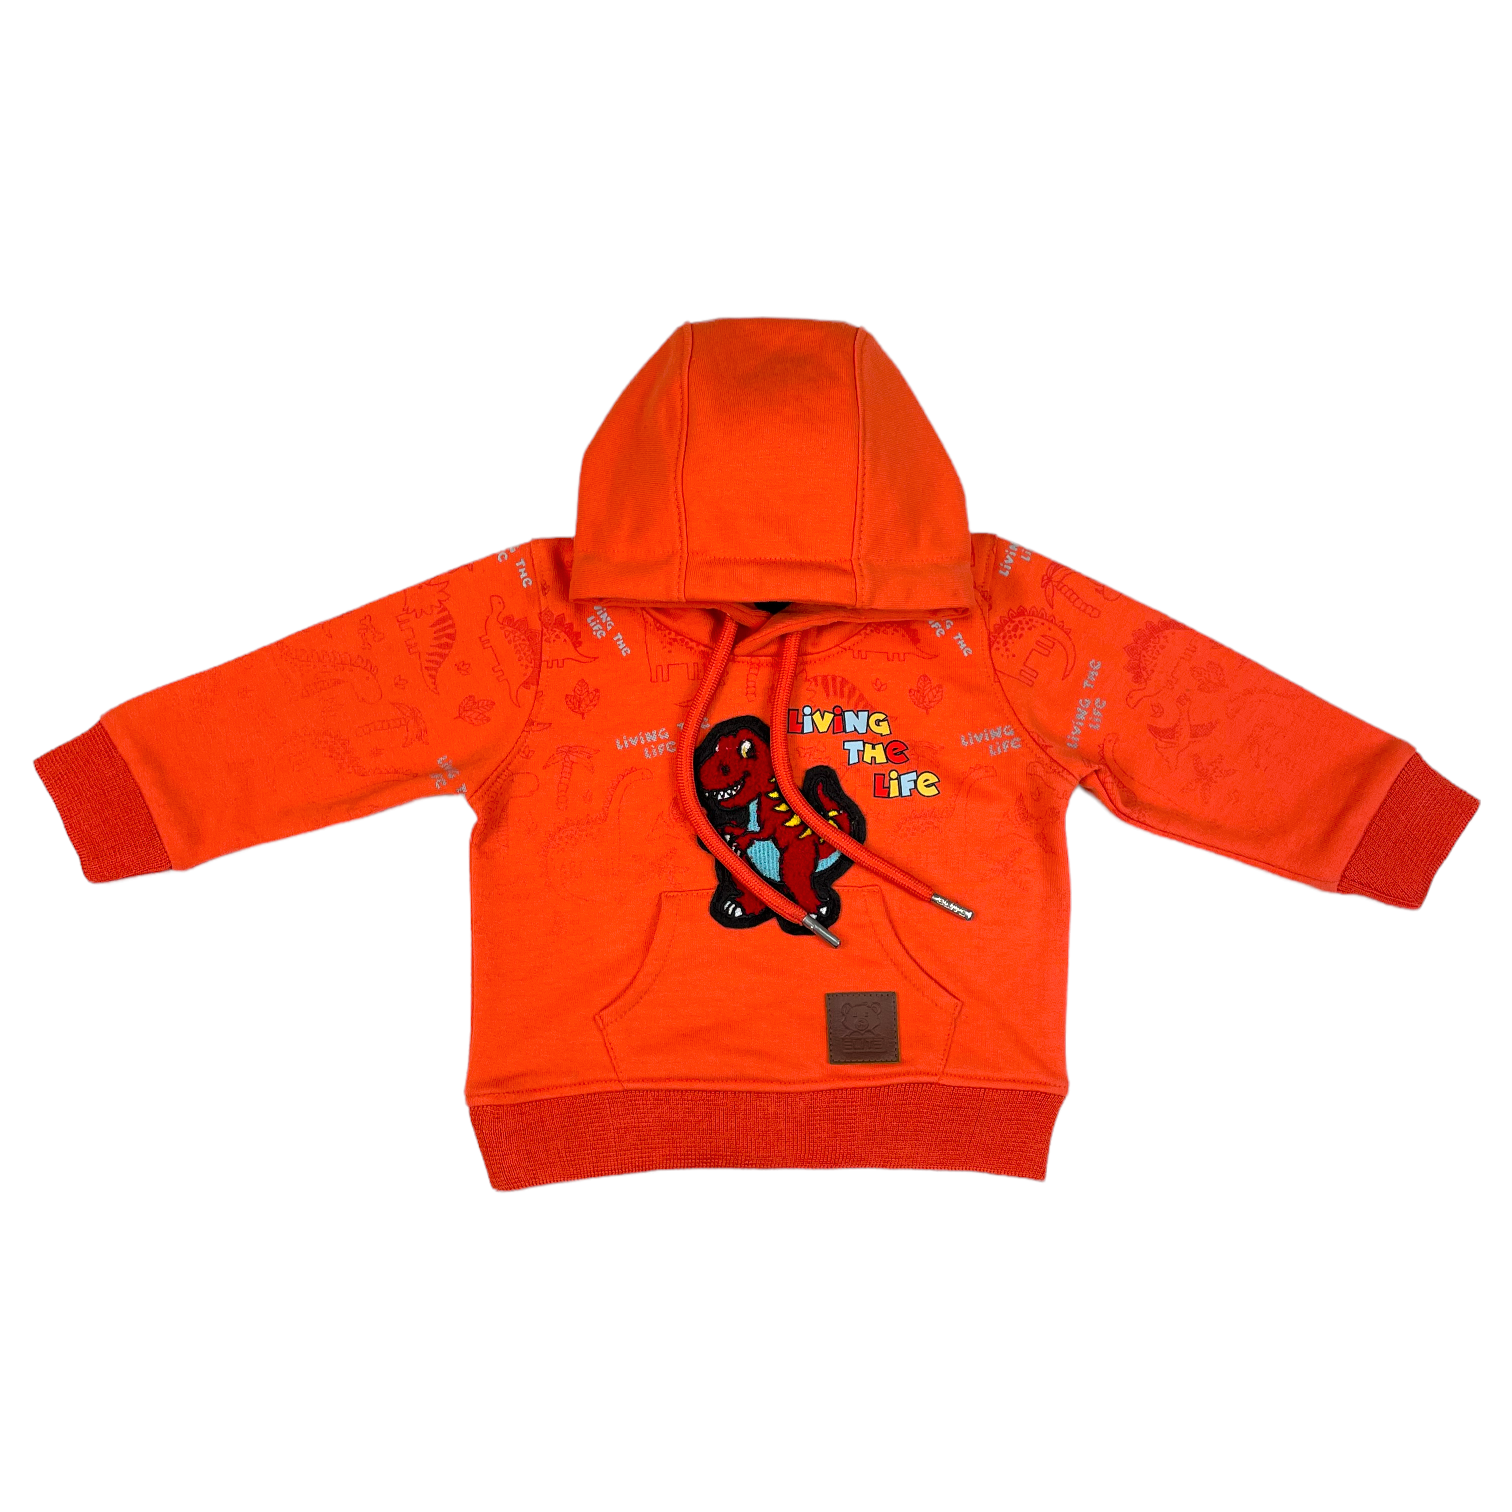 Dino Infant Boys Premium Jogger Set Orange